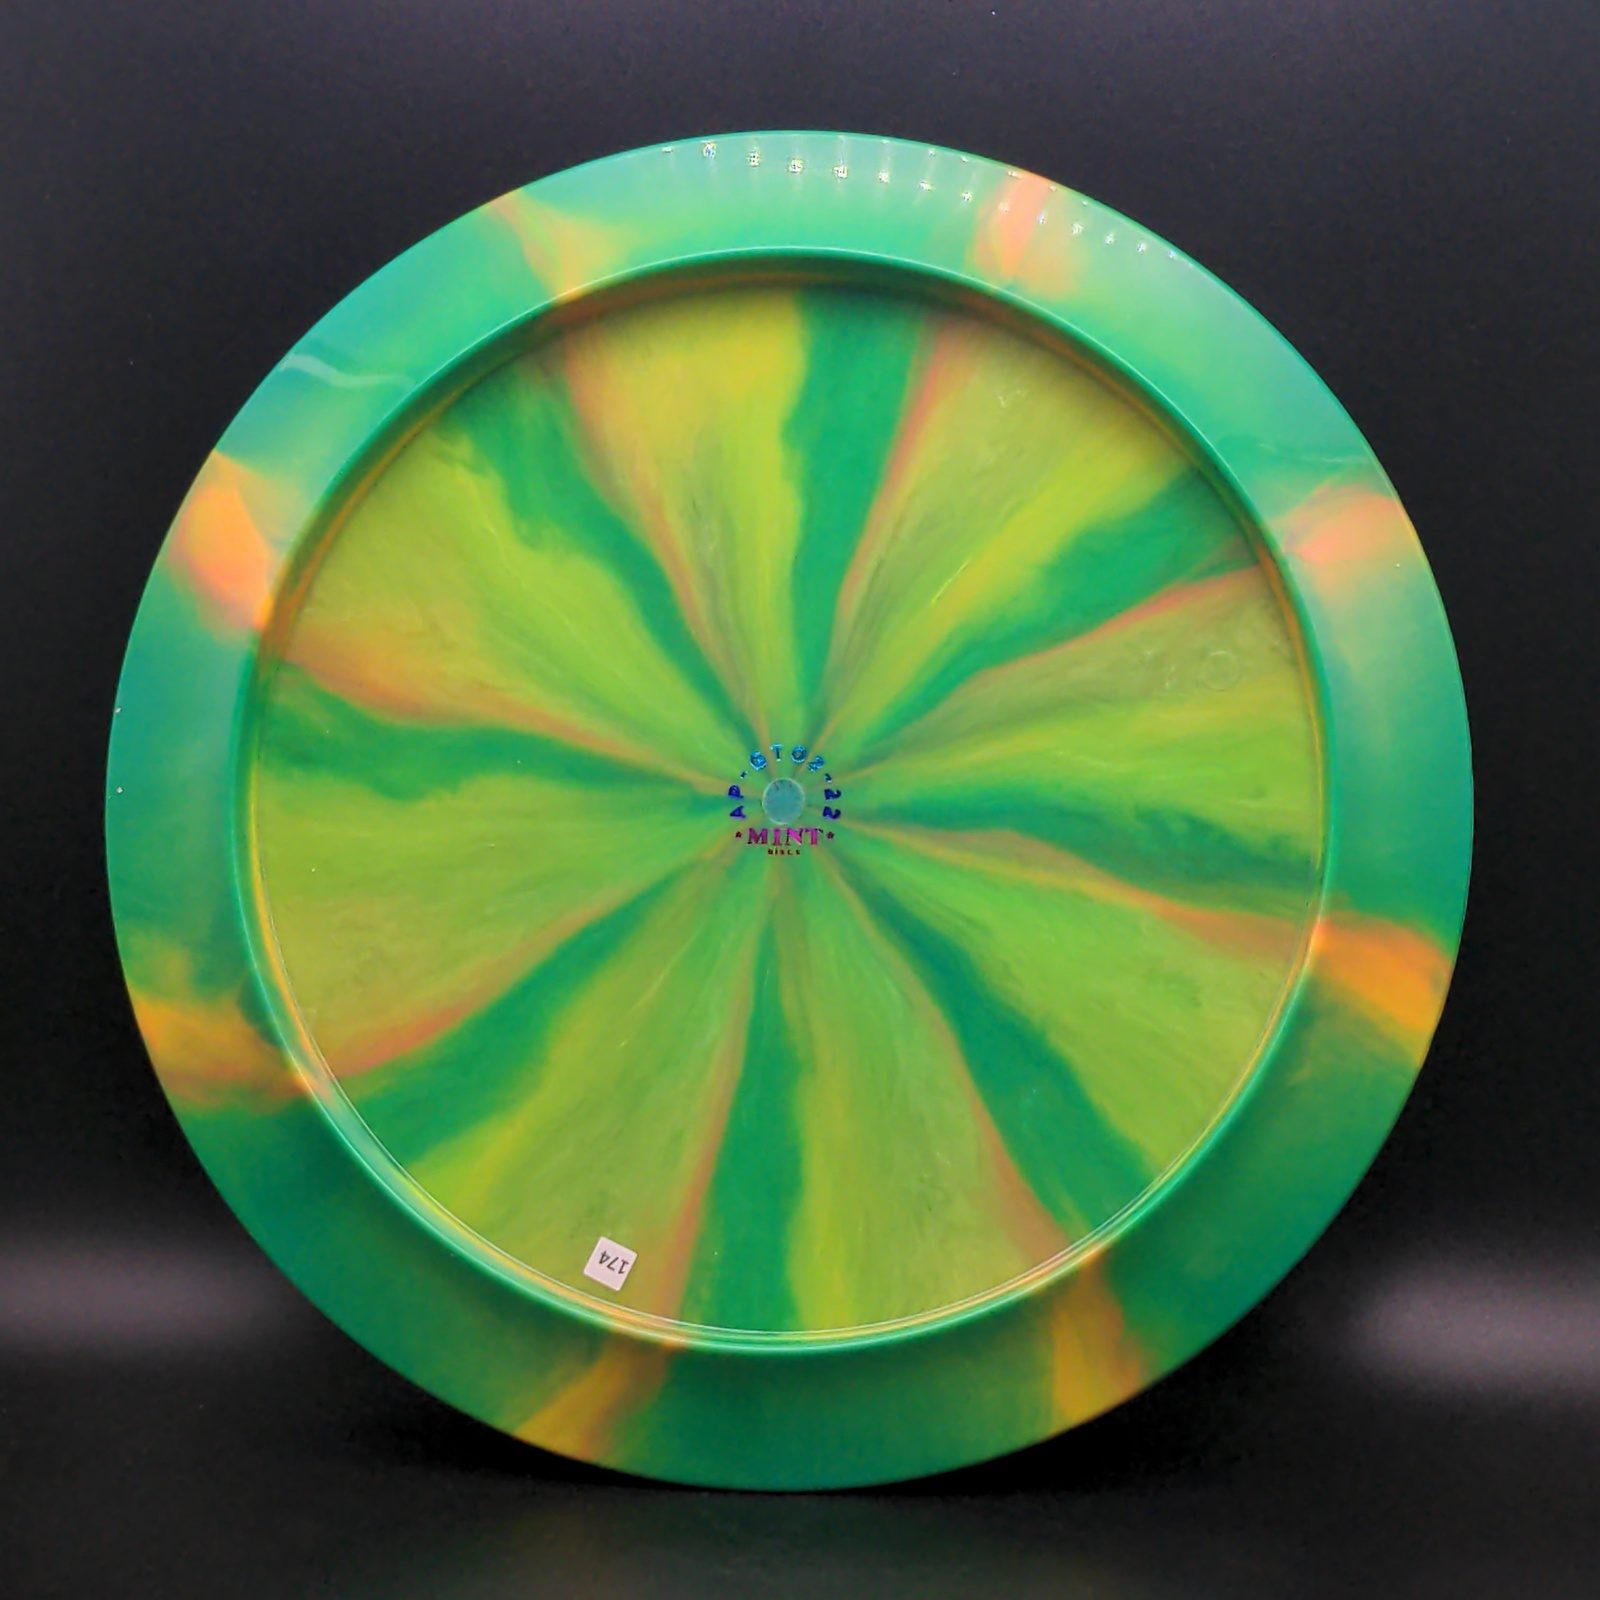 Swirl Apex Goat - "GOAT" LE MINT Discs